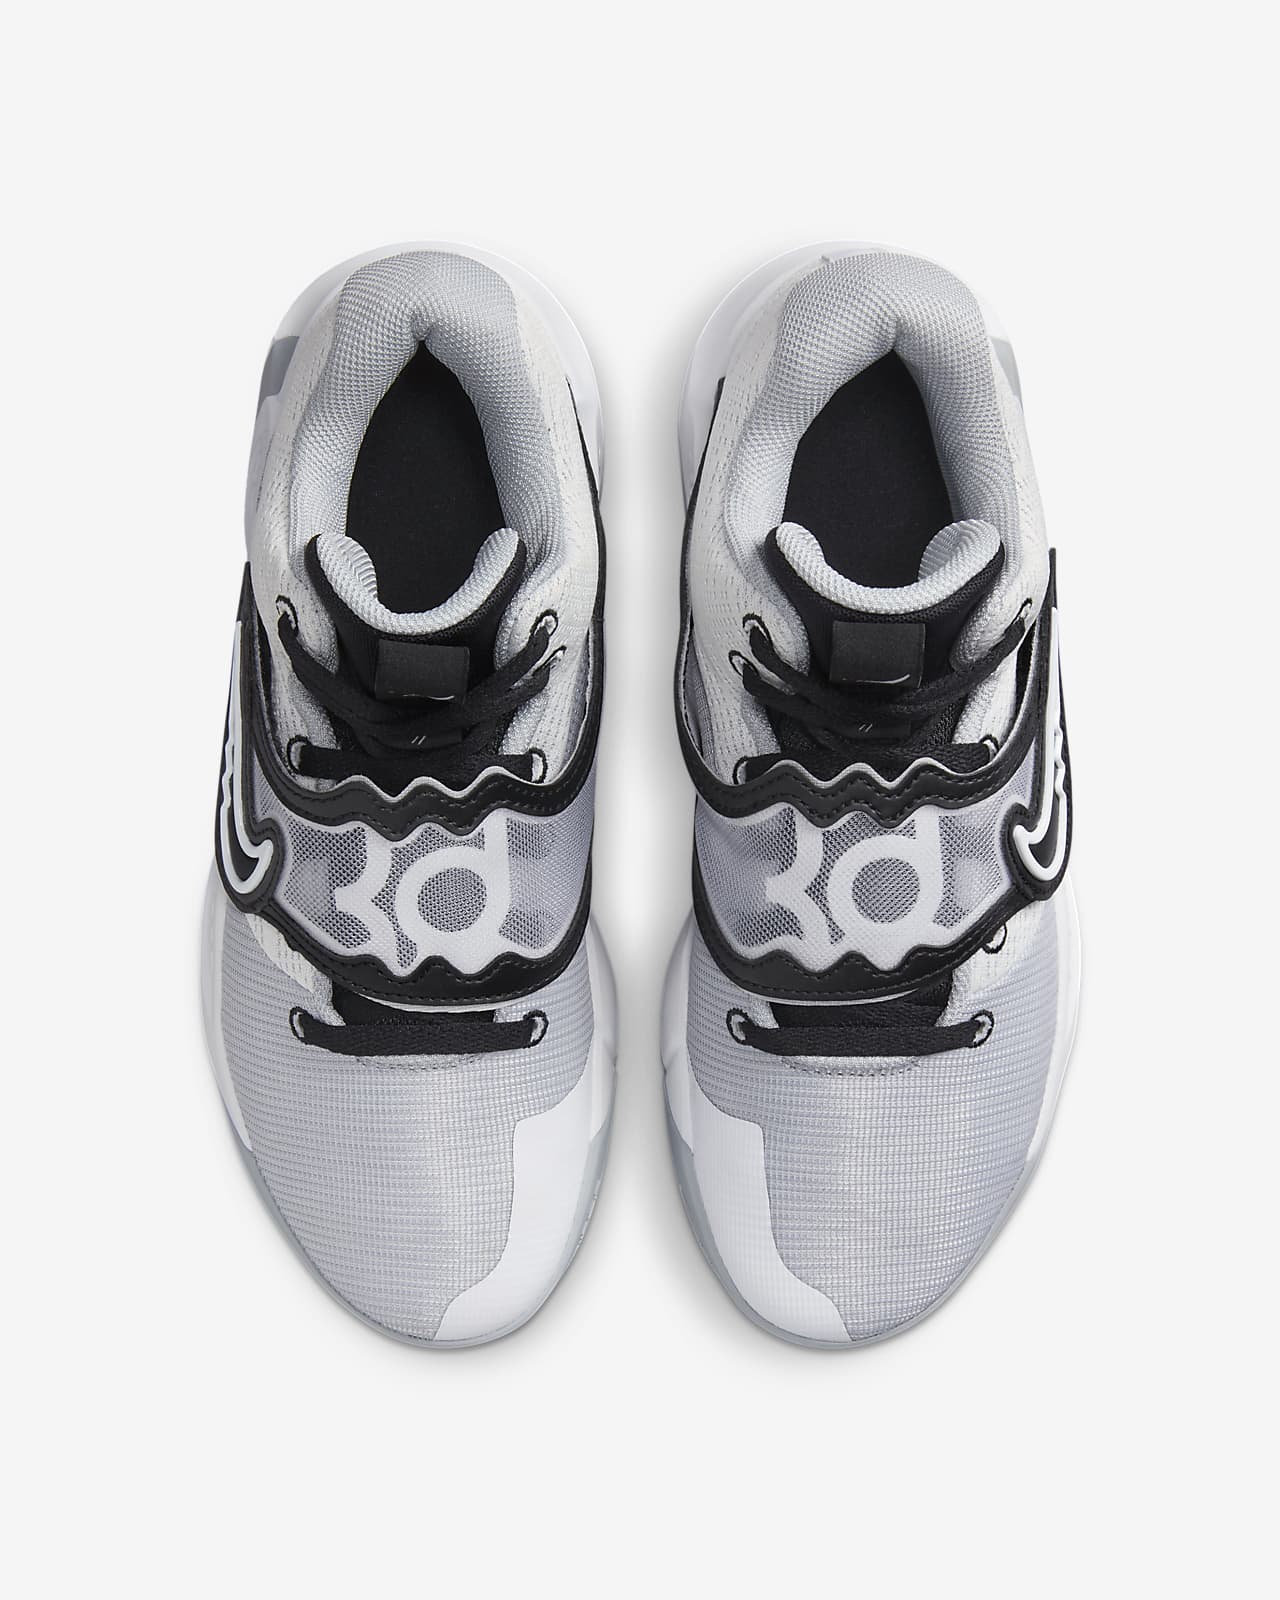 KD Trey 5 X Shoes. Nike.com